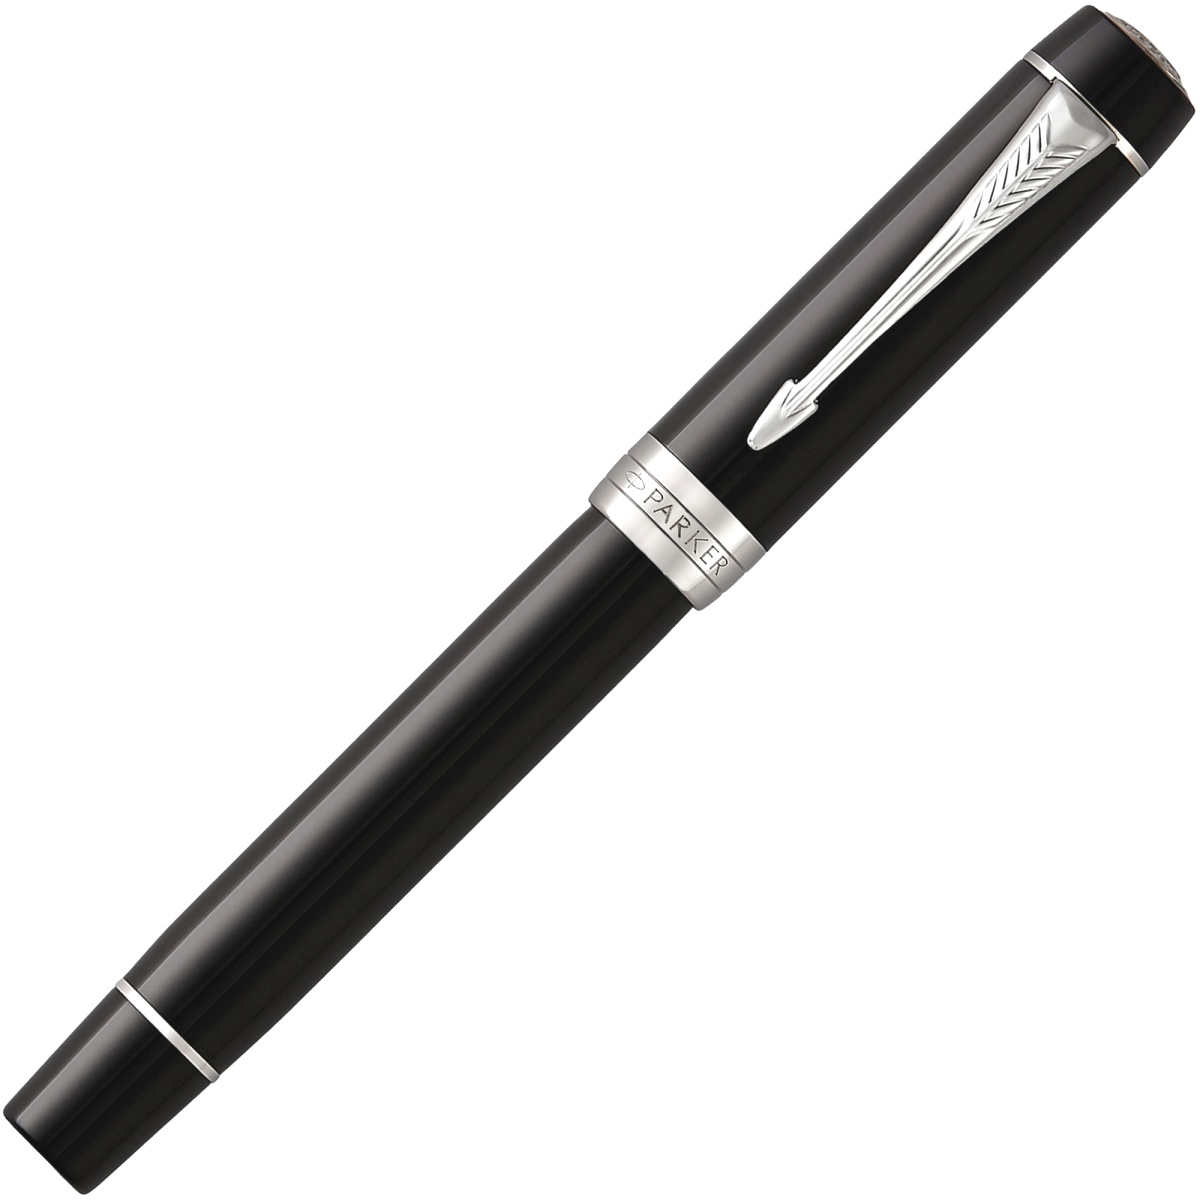  Перьевая ручка Parker Duofold Classic Centennial F77, Black CT (Перо F), фото 2